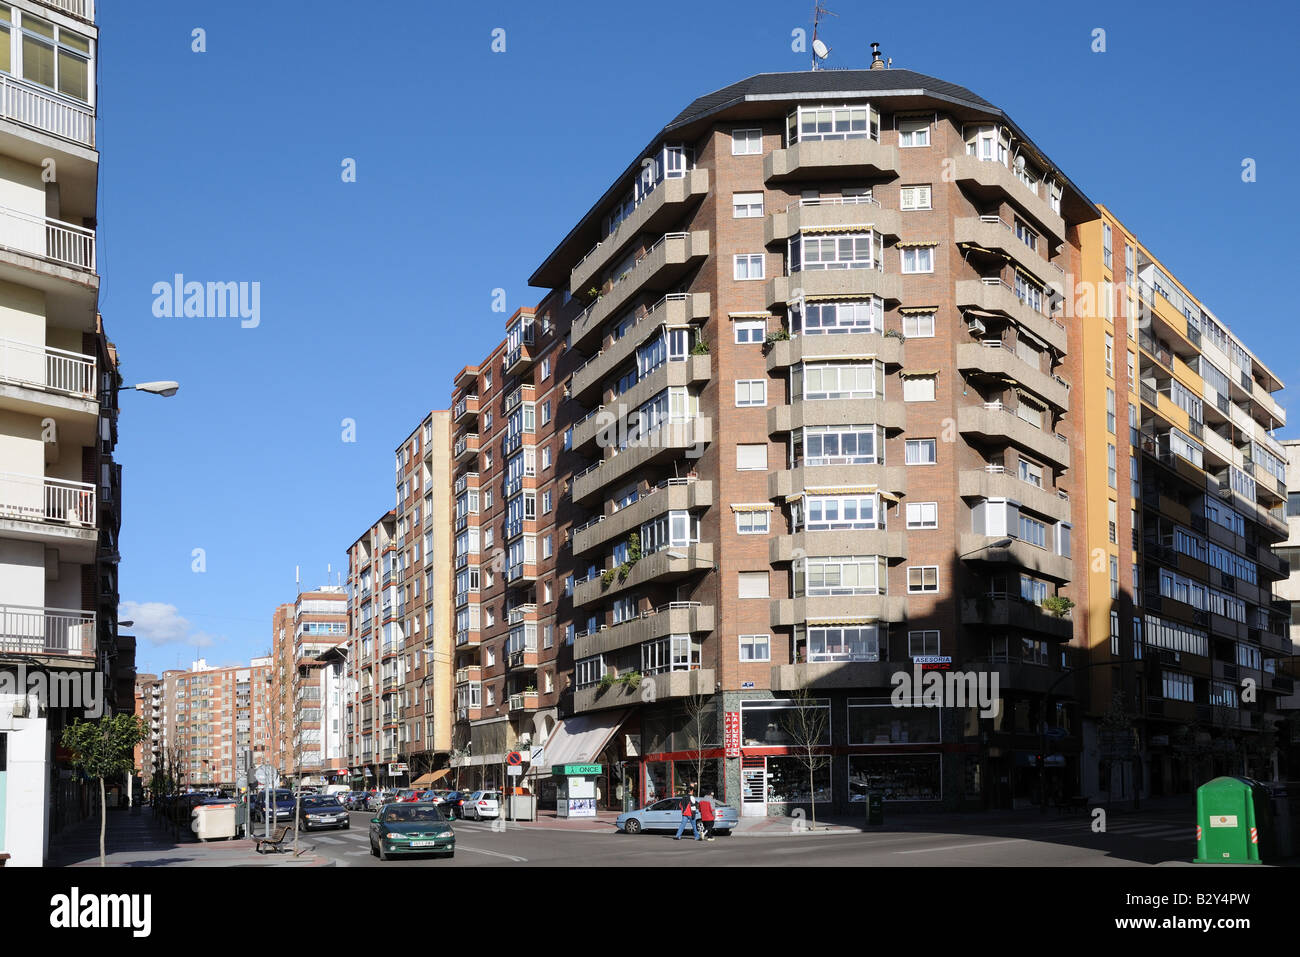 Modern shops high rise multi storey apartment blocks housing and street scene Valladolid Spain Stock Photo